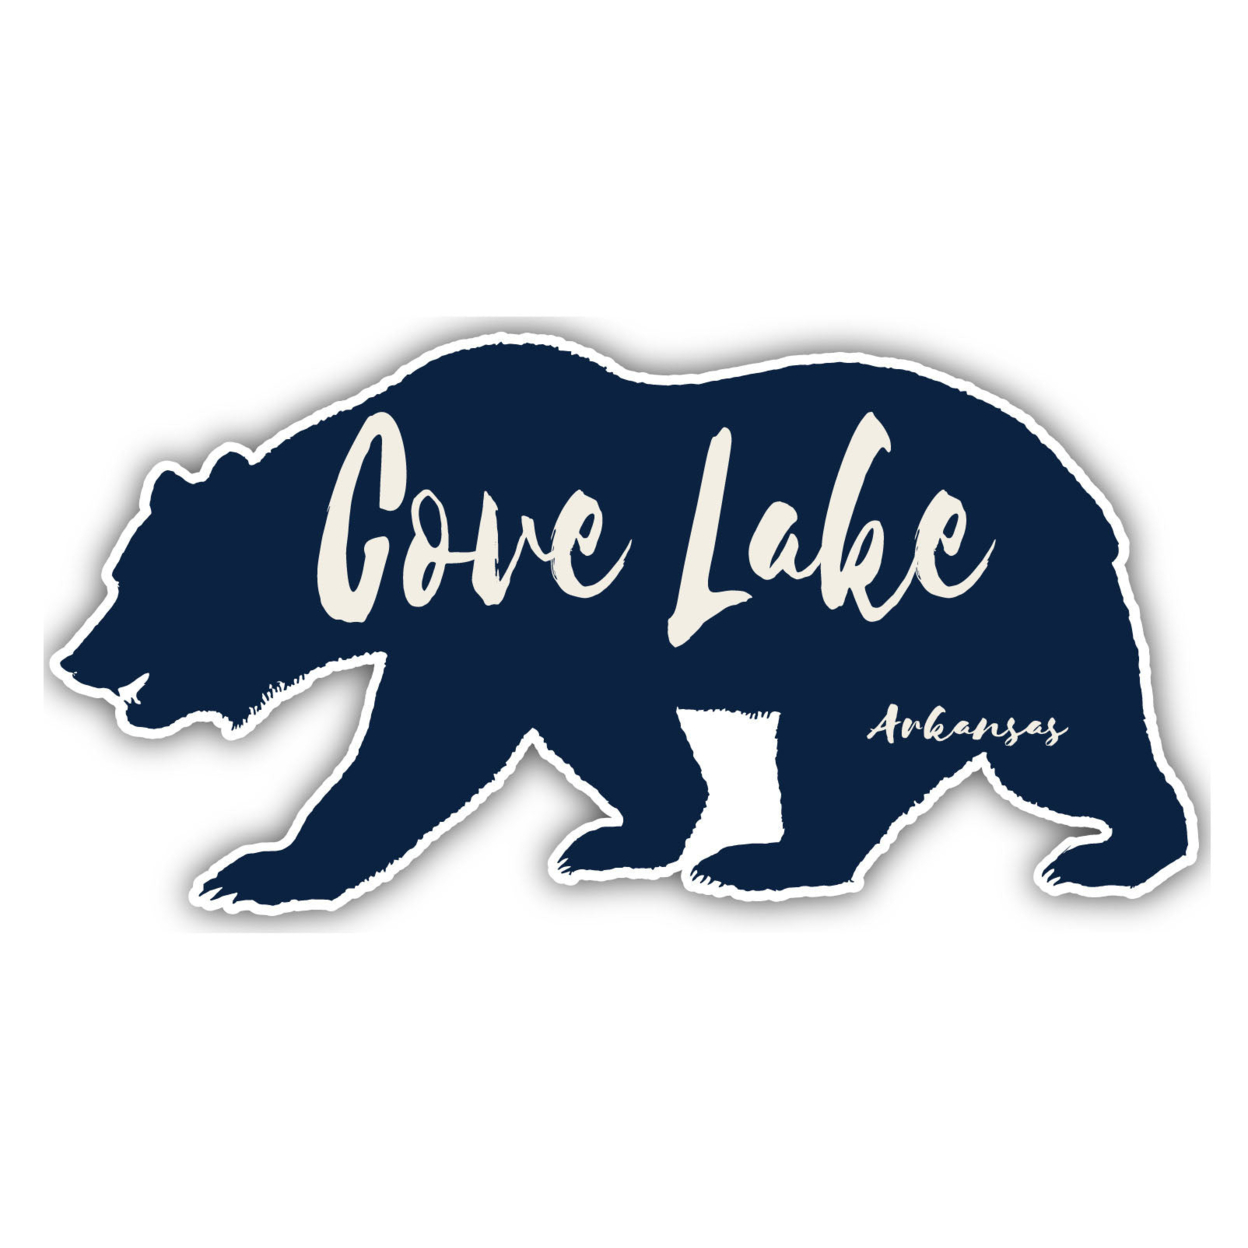 Cove Lake Arkansas Souvenir Decorative Stickers (Choose Theme And Size) - 4-Pack, 8-Inch, Bear